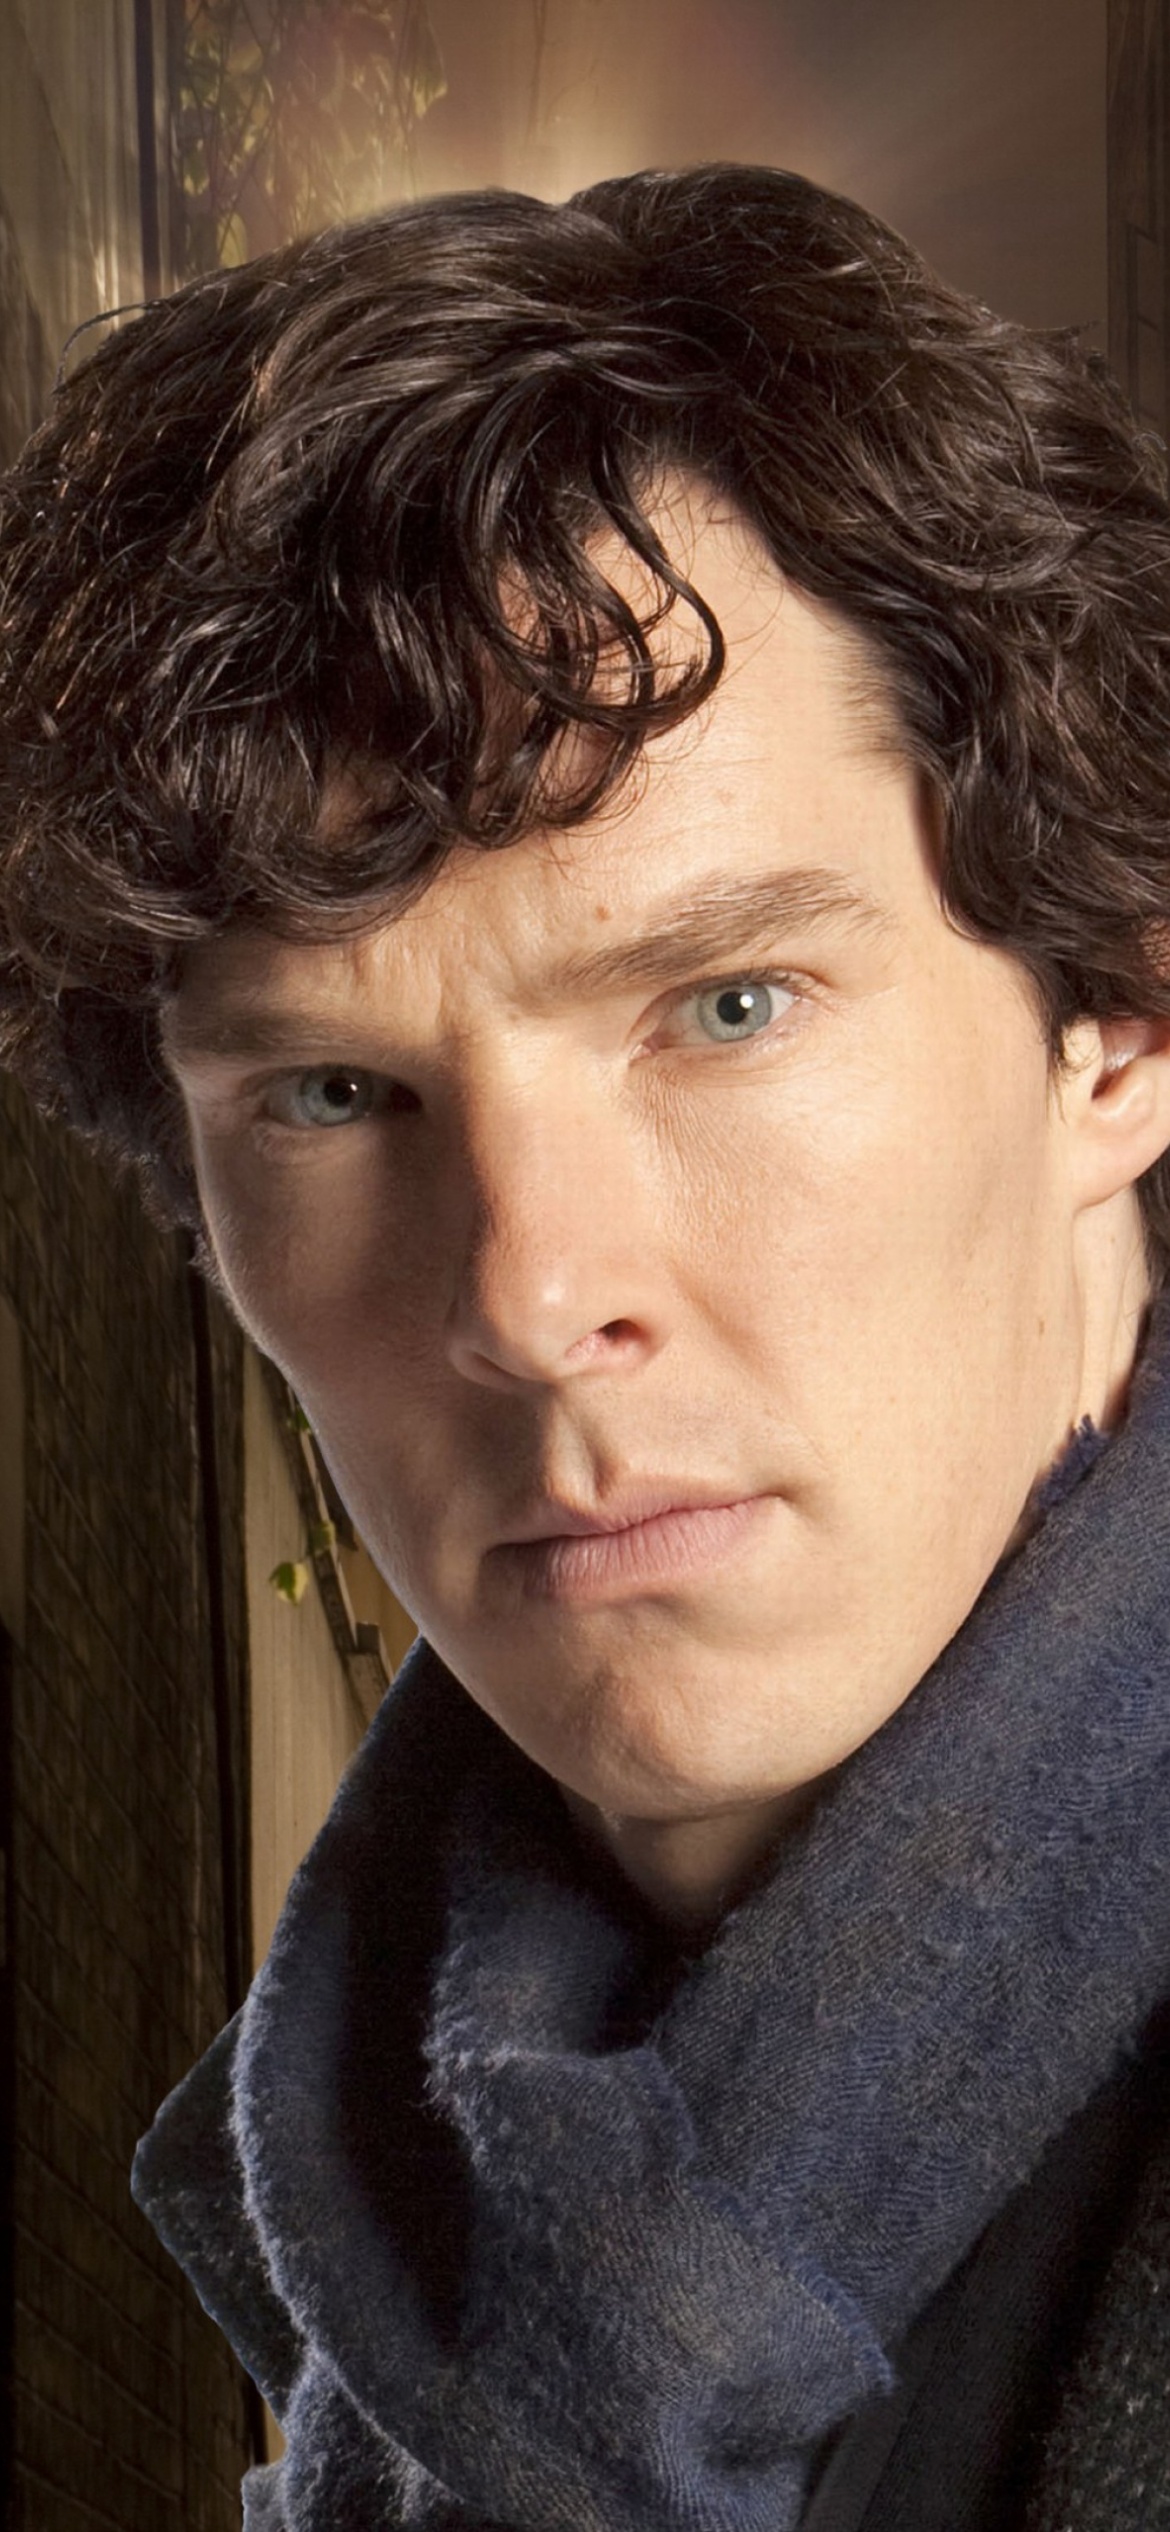 Sherlock TV series - Benedict Cumberbatch Wallpaper for iPhone 12 Pro